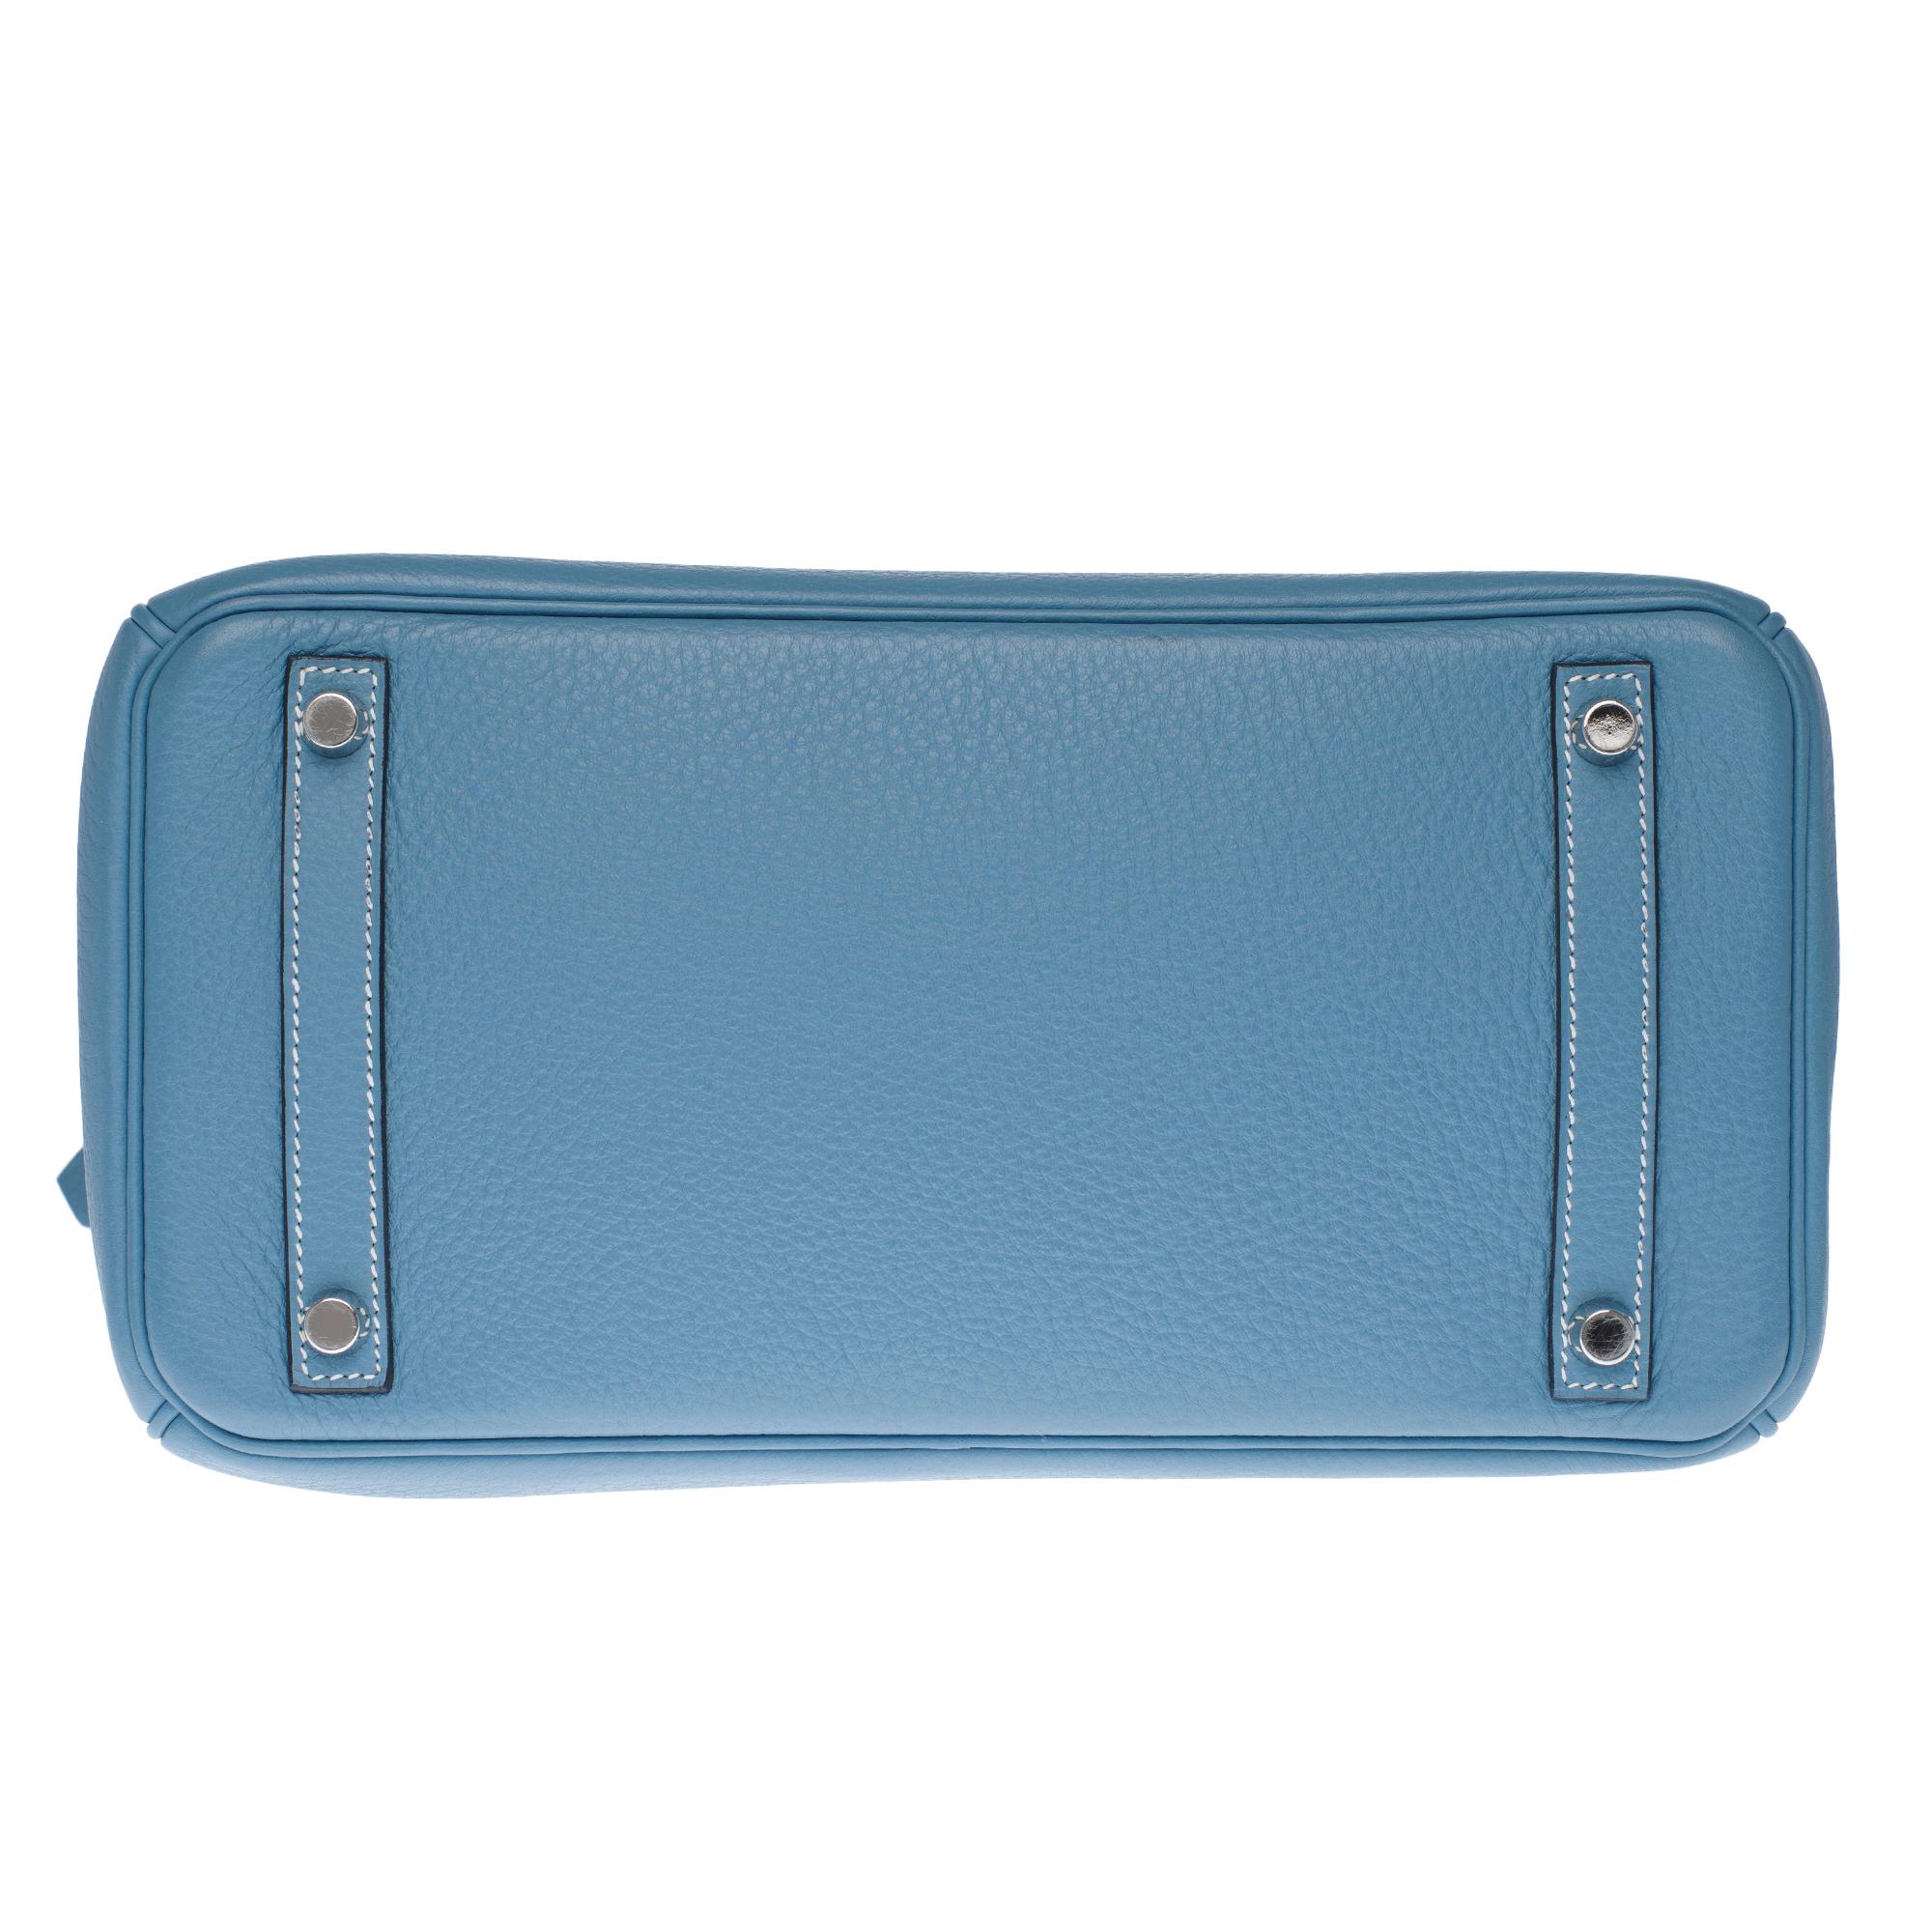 Hermès Birkin 30 handbag in Togo blue jean leather, PHW 5